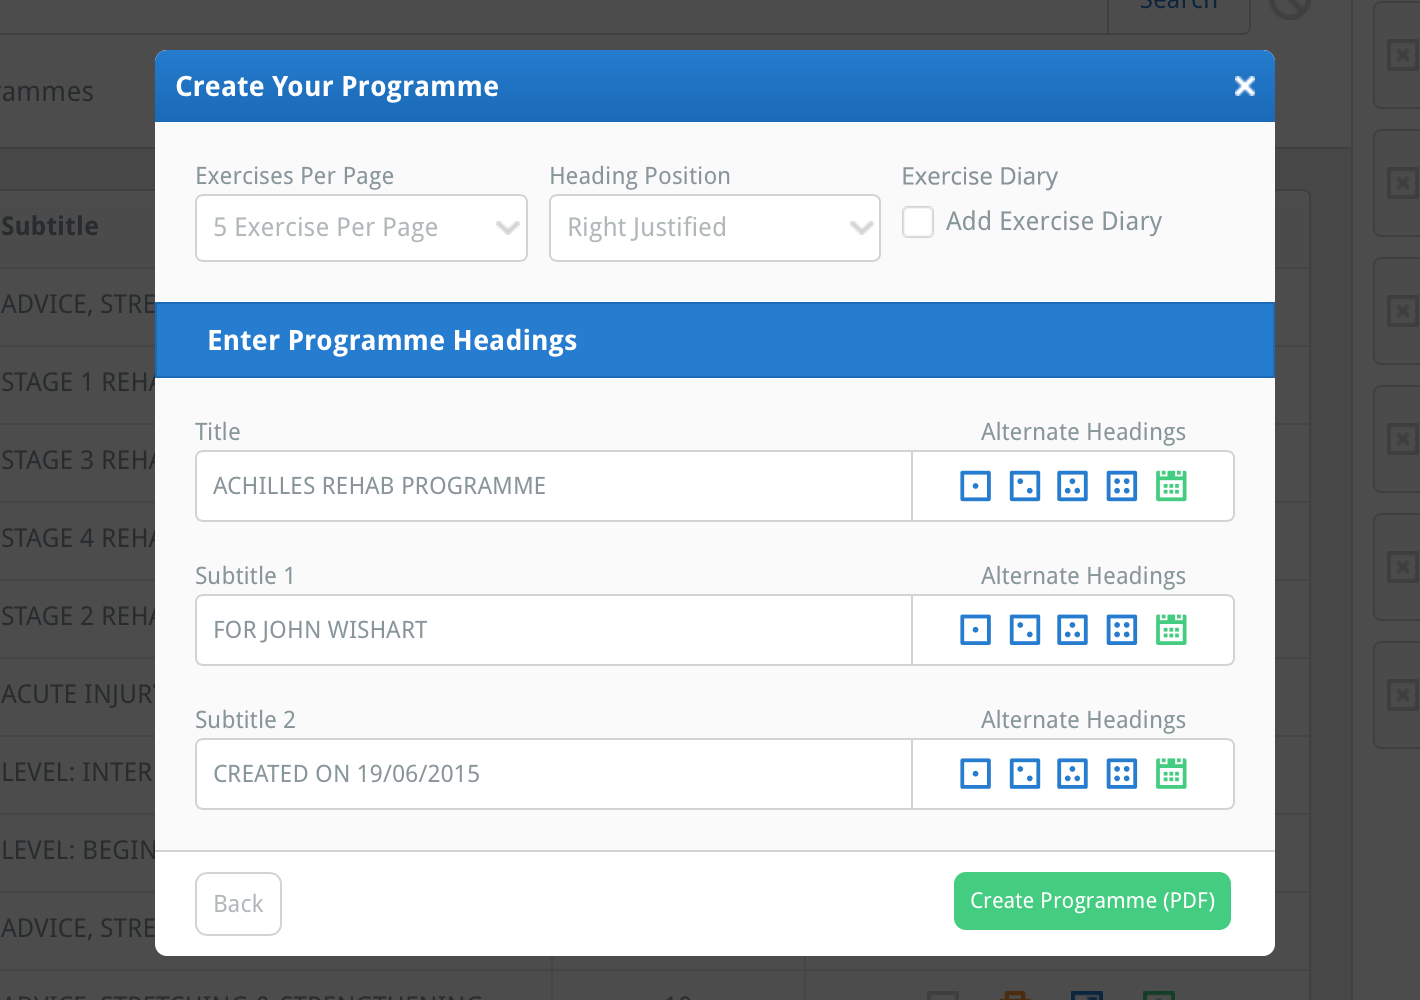 Create Your Programme window